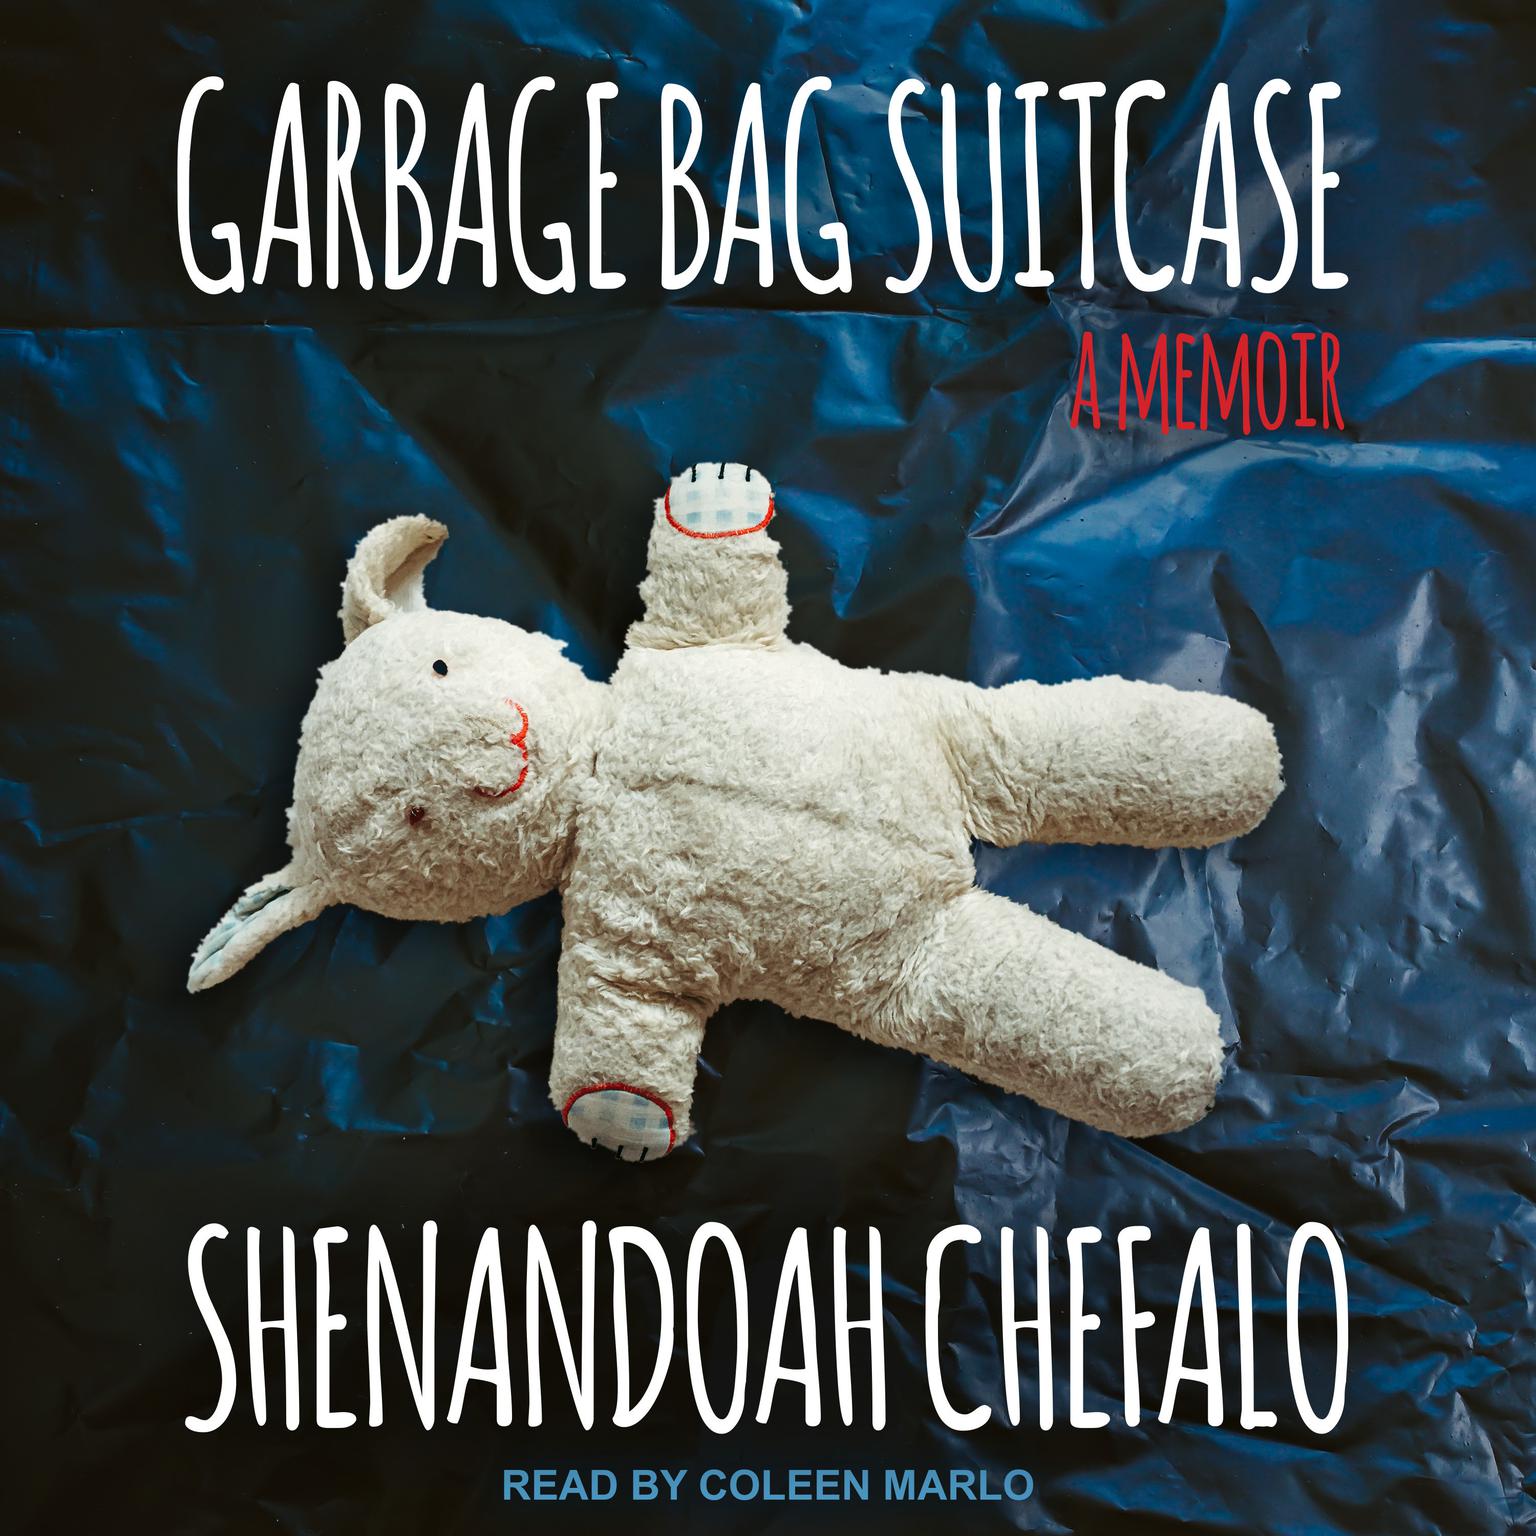 Garbage Bag Suitcase: A Memoir Audiobook, by Shenandoah Chefalo